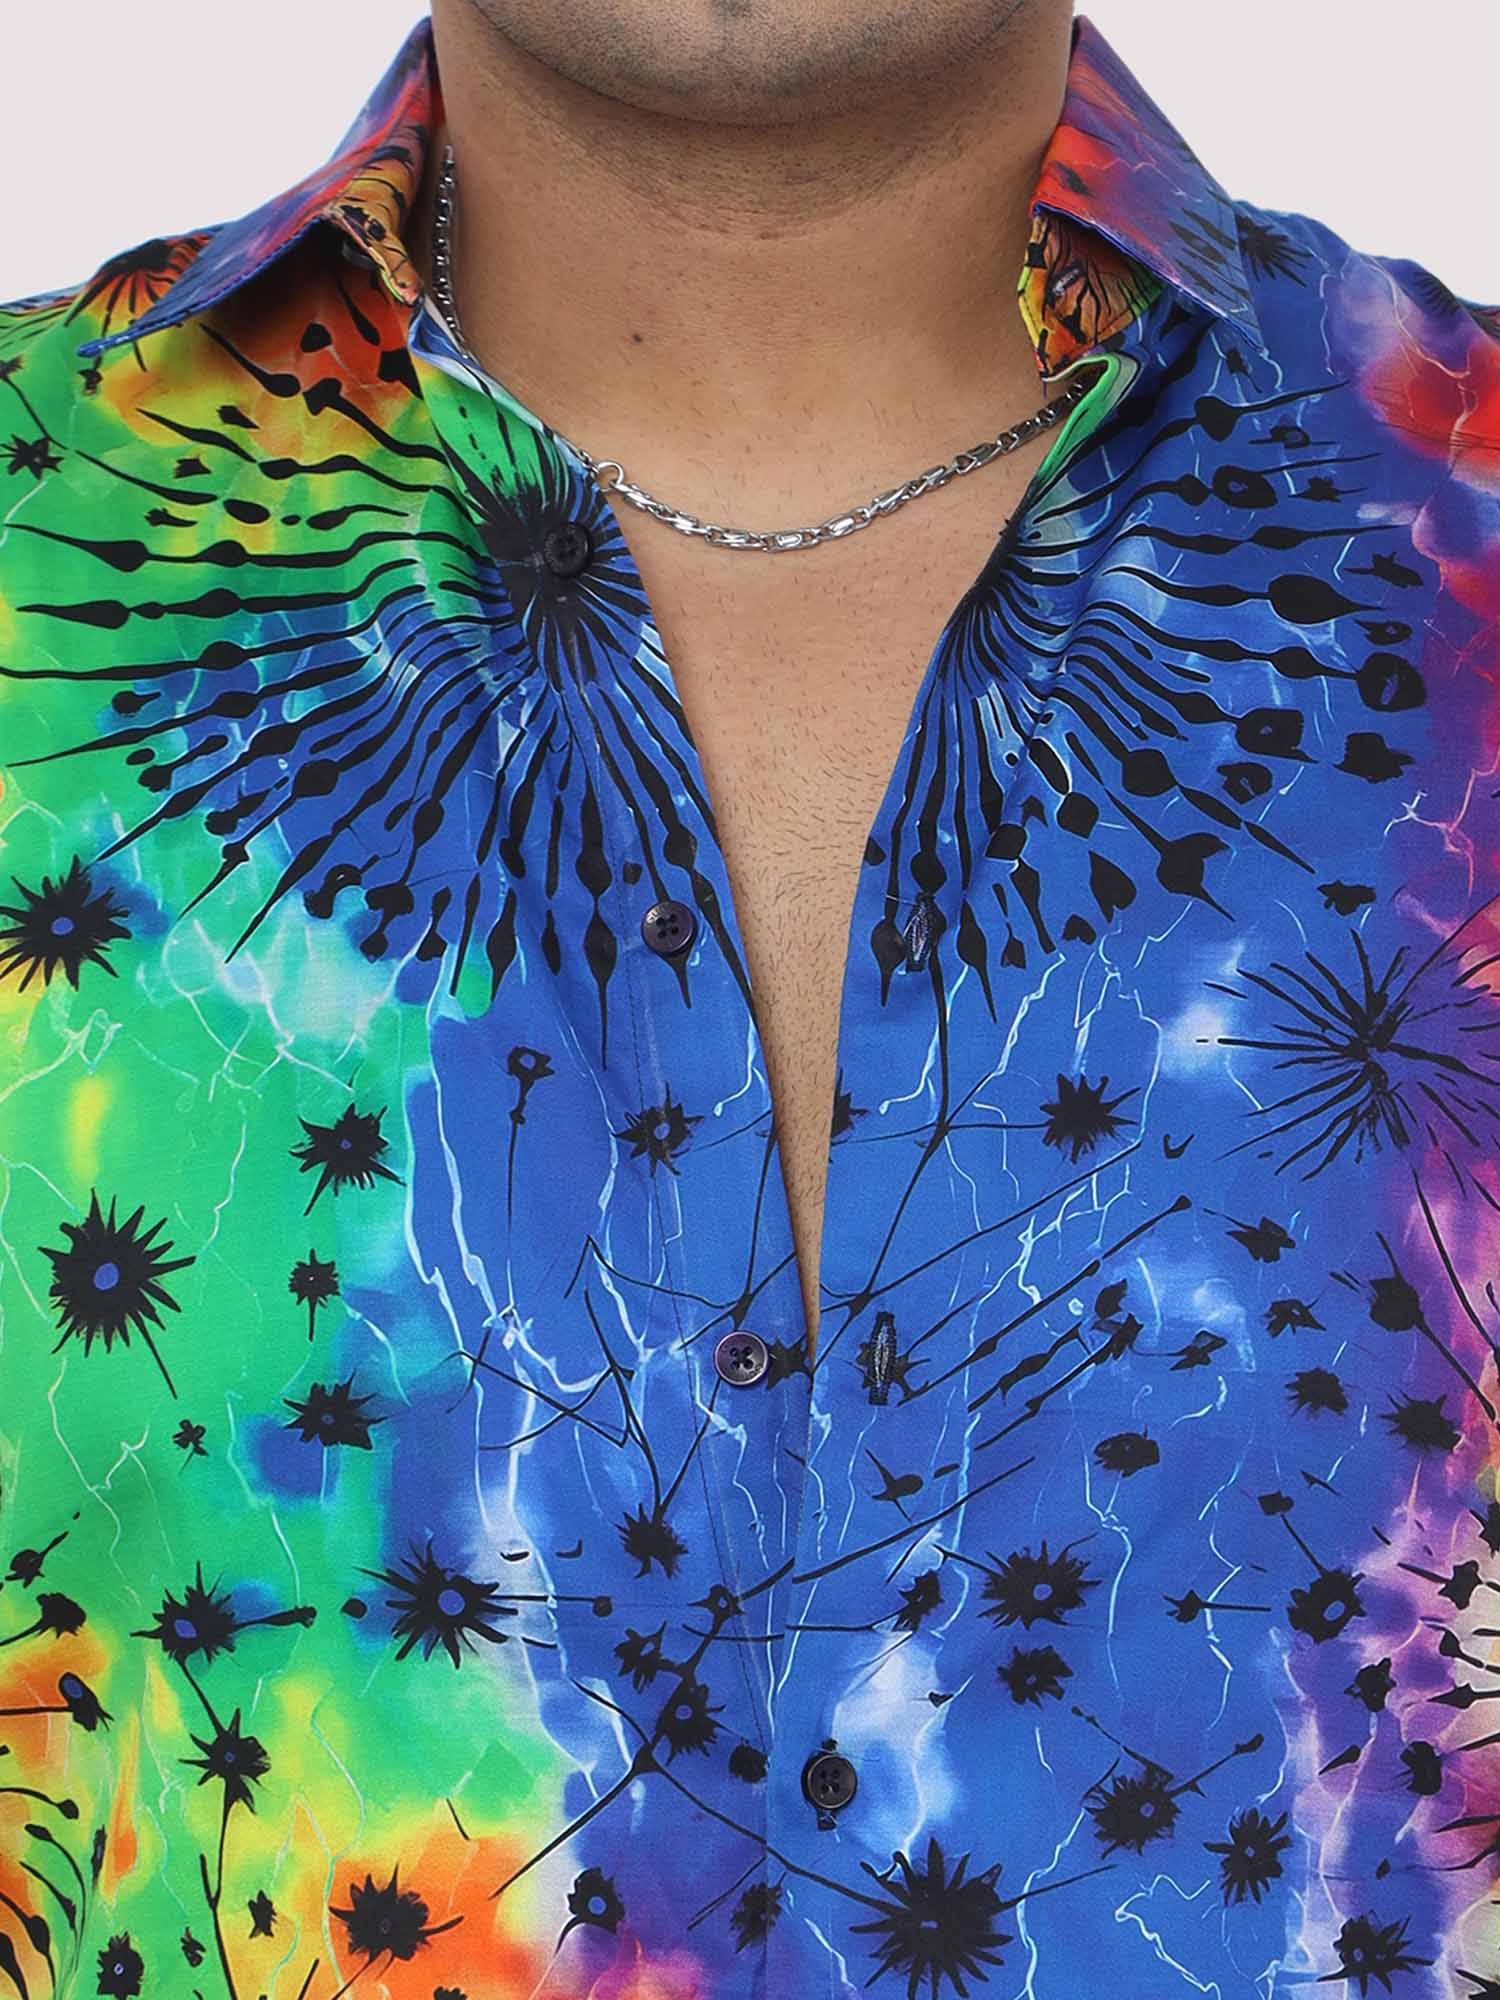 Men Plus Size Rainbow Scrunch Digital Printed Half Shirt - Guniaa Fashions